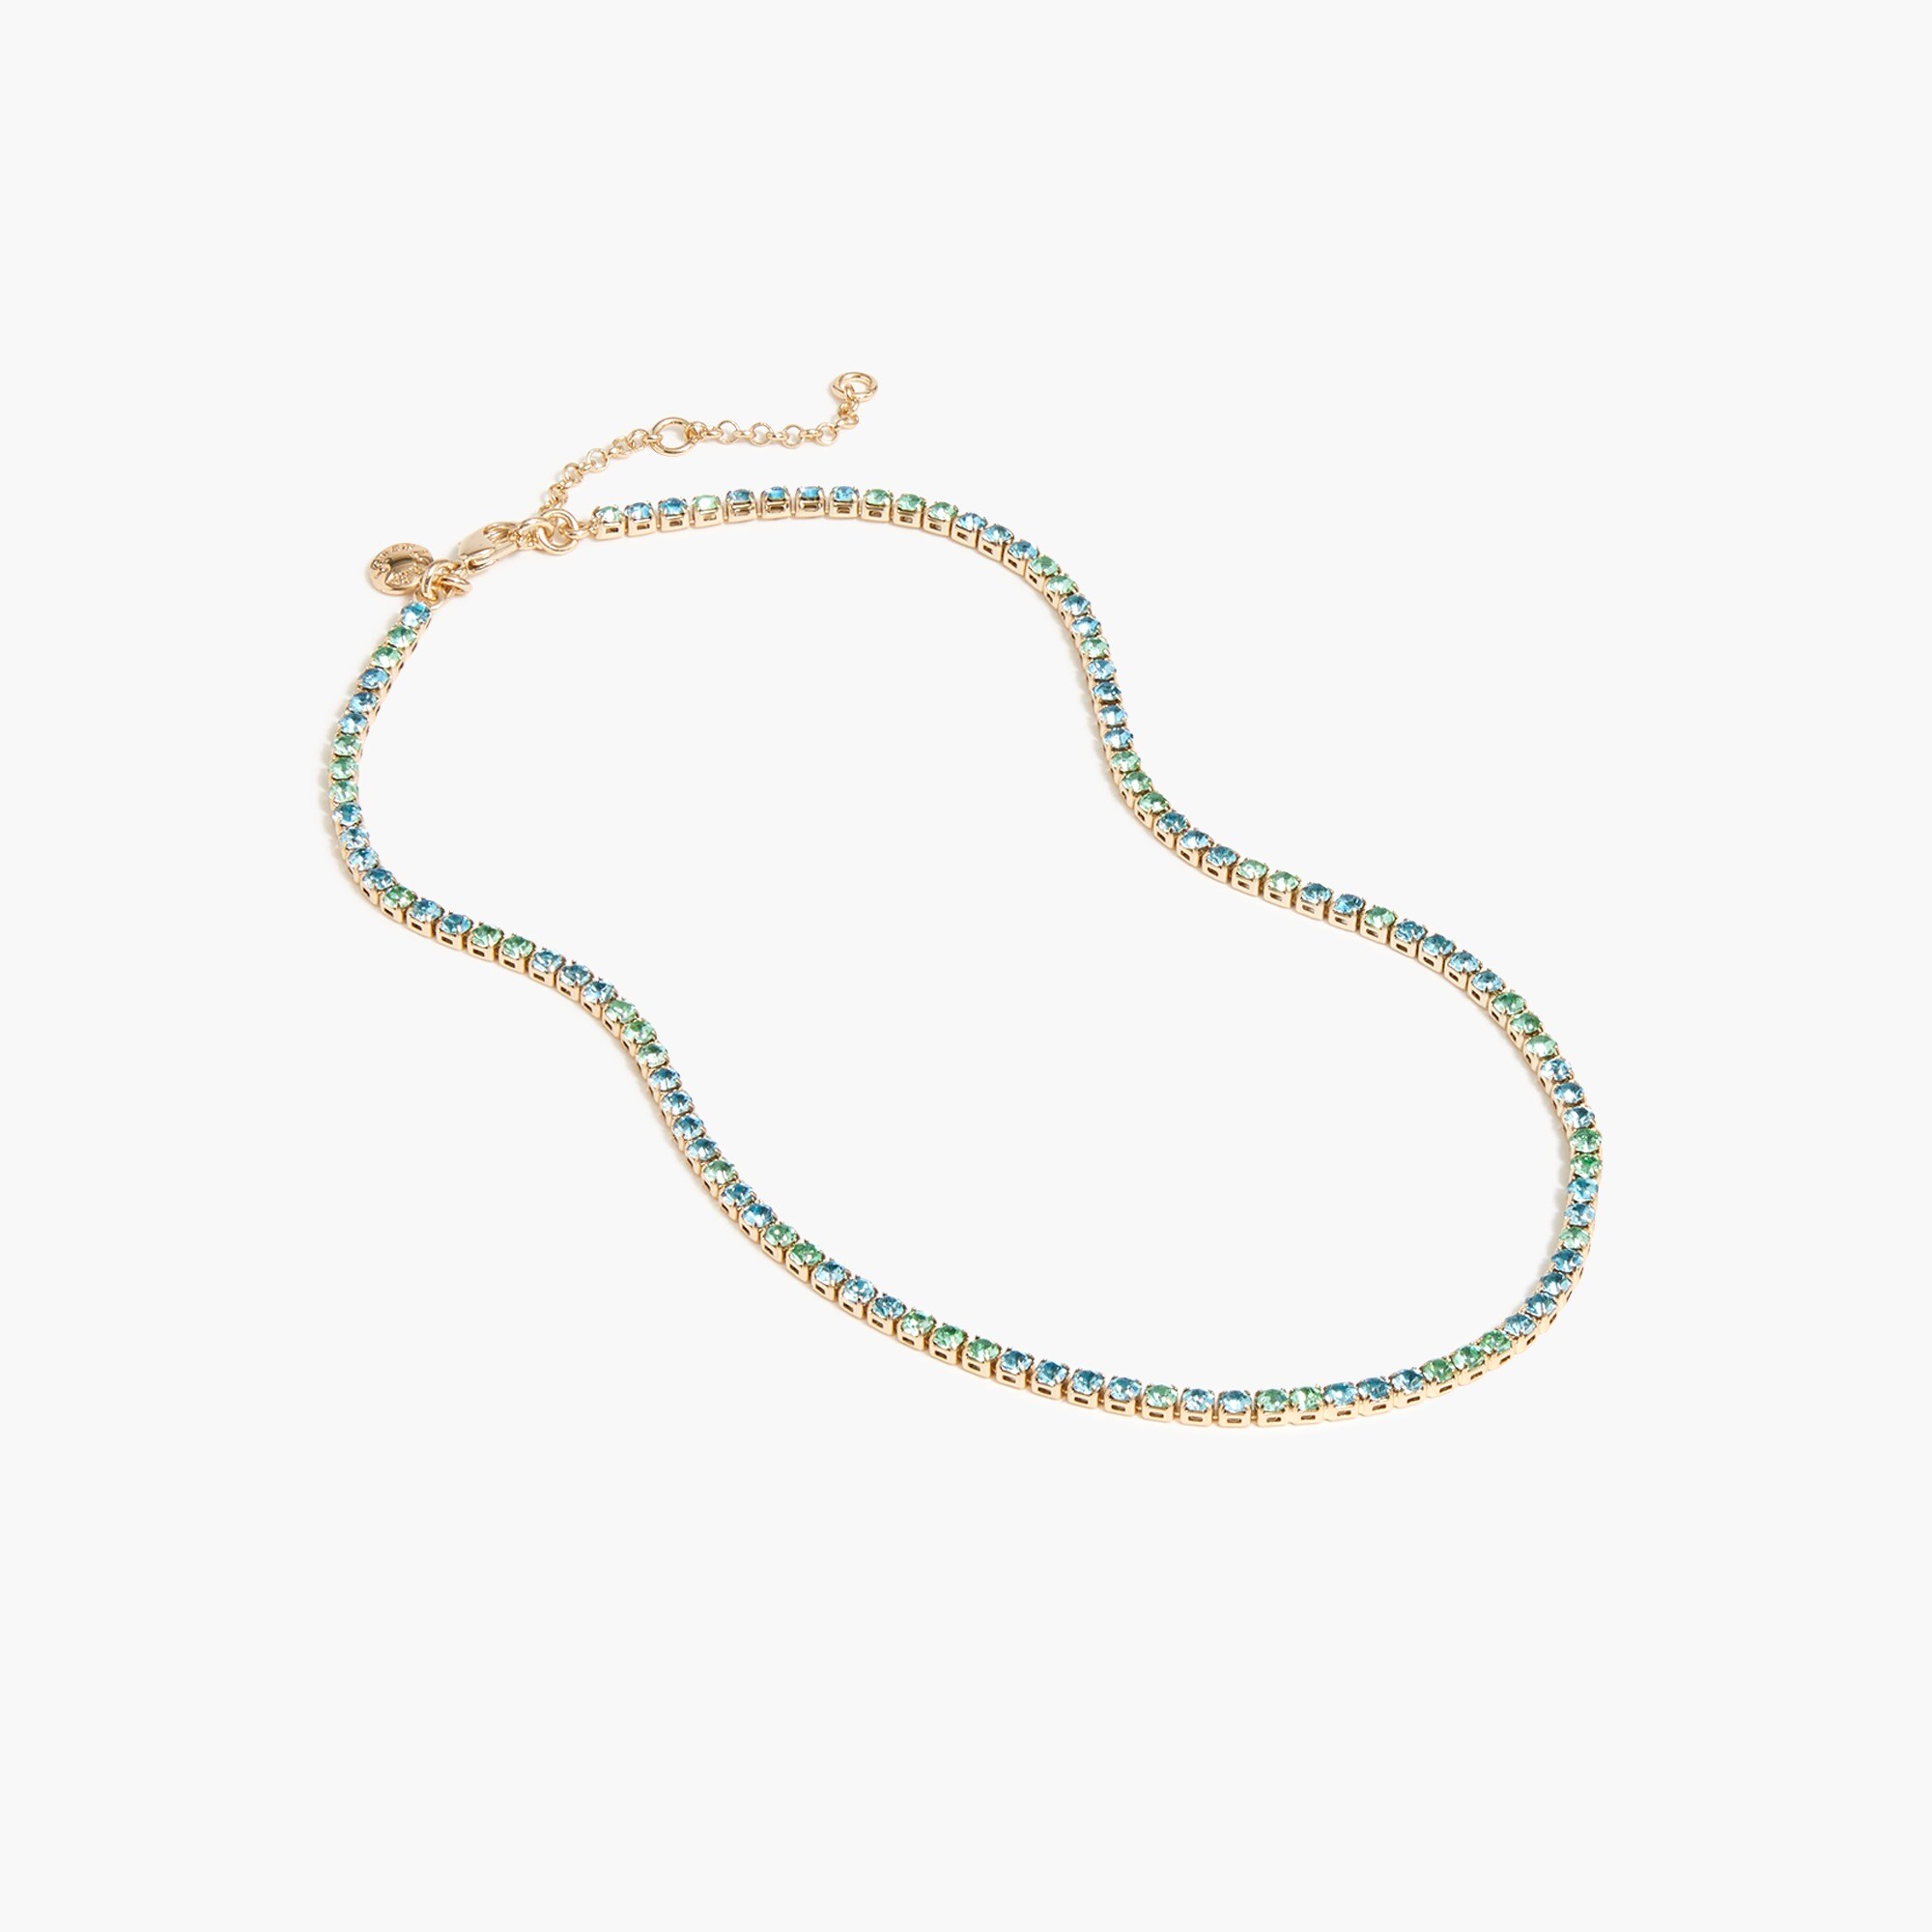  Crystal tennis necklace